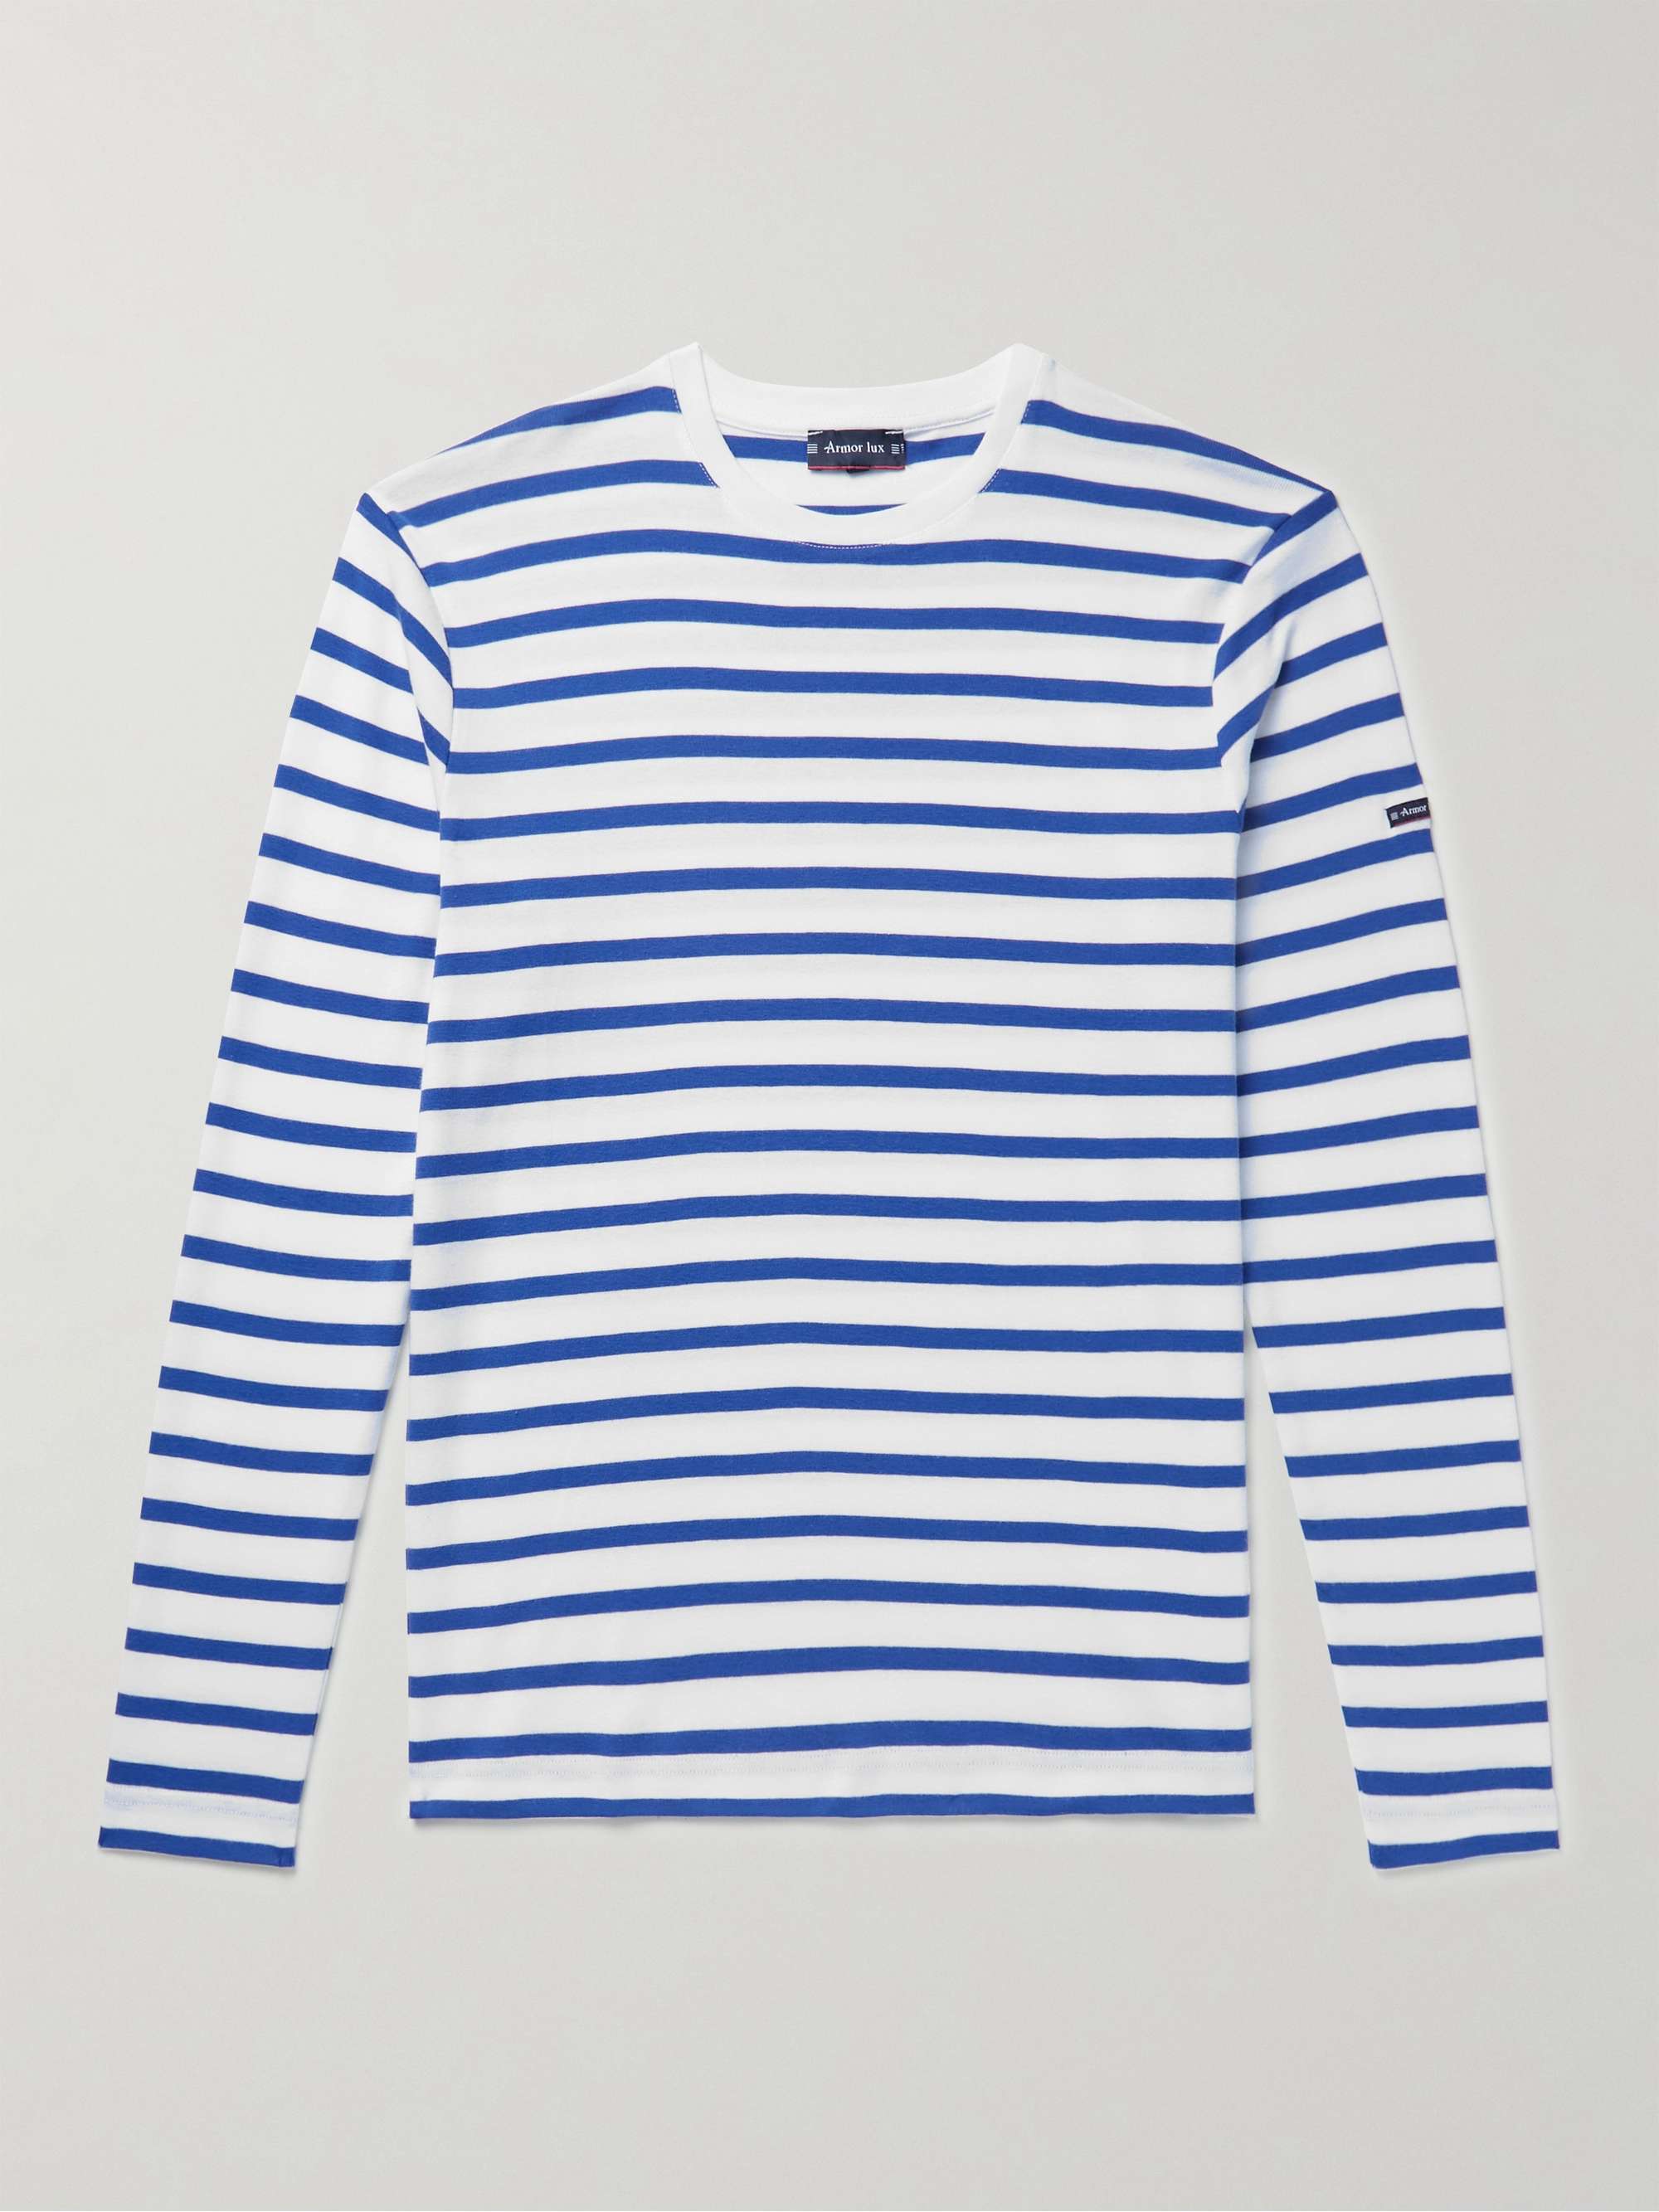 ARMOR-LUX Slim-Fit Striped Cotton-Jersey T-Shirt for Men | MR PORTER